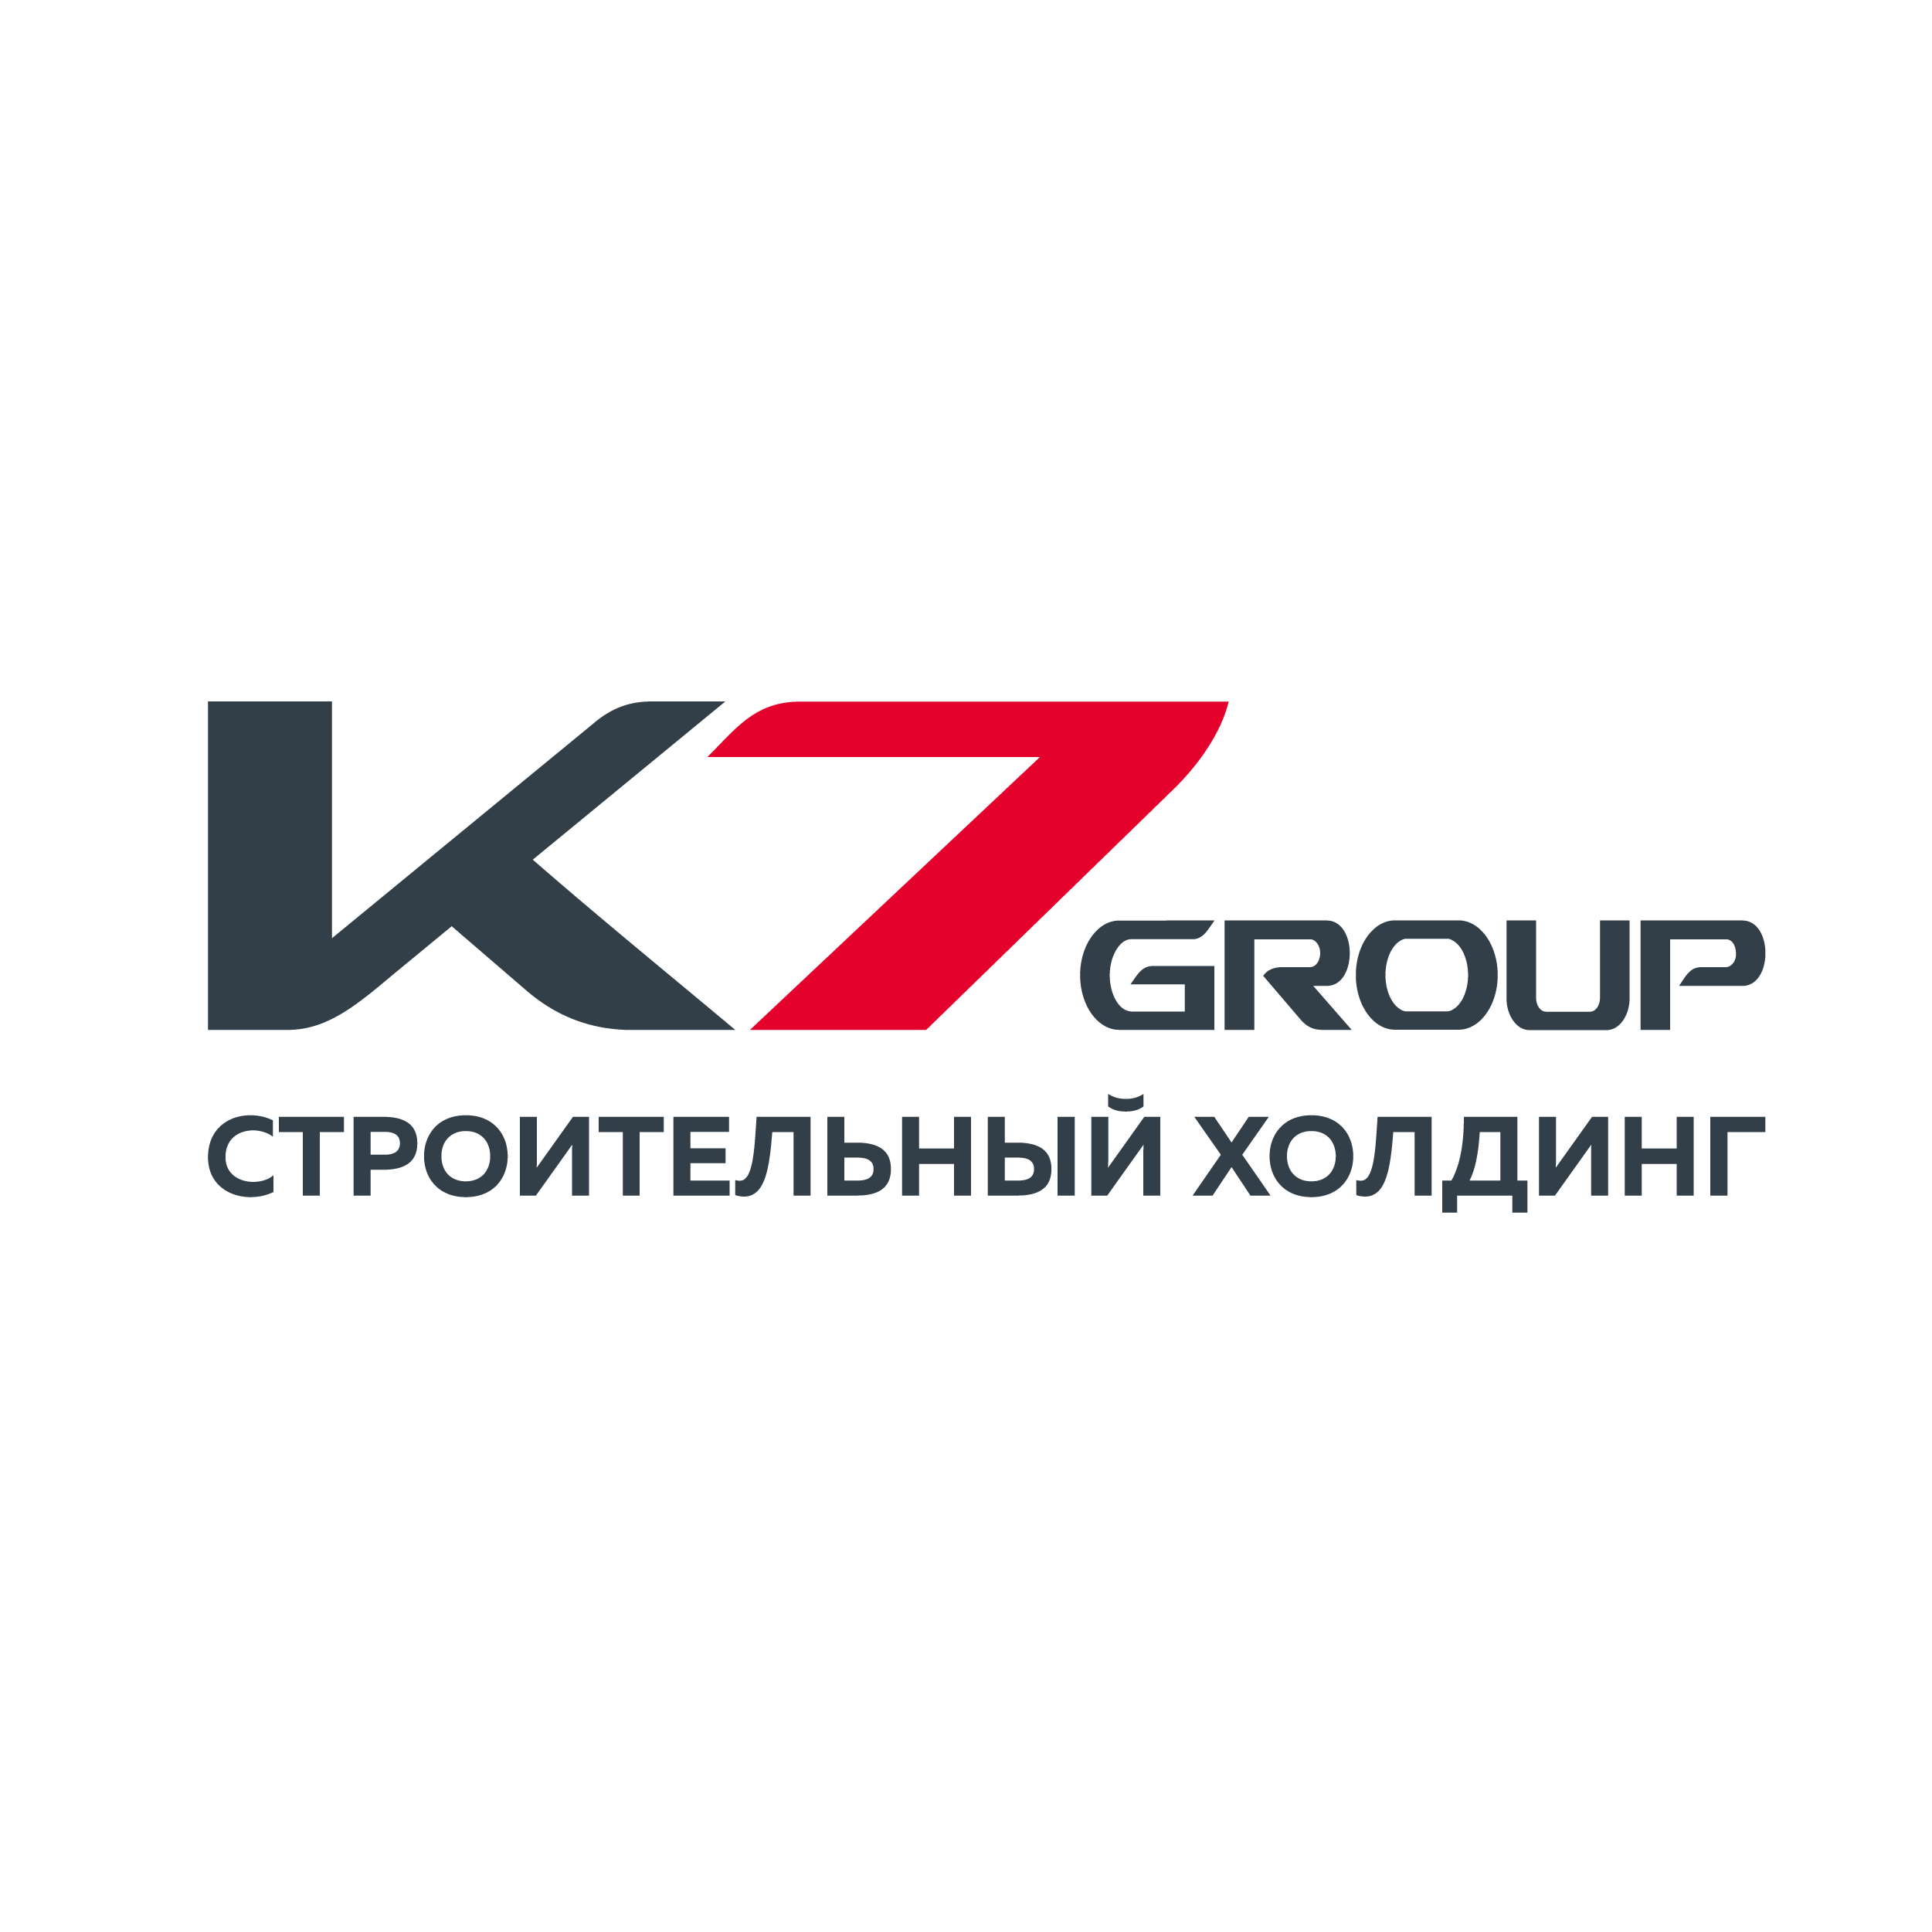 K7. Строительный Холдинг «SSD Group» Сахалин. R-7 Group logo. 7k7k.